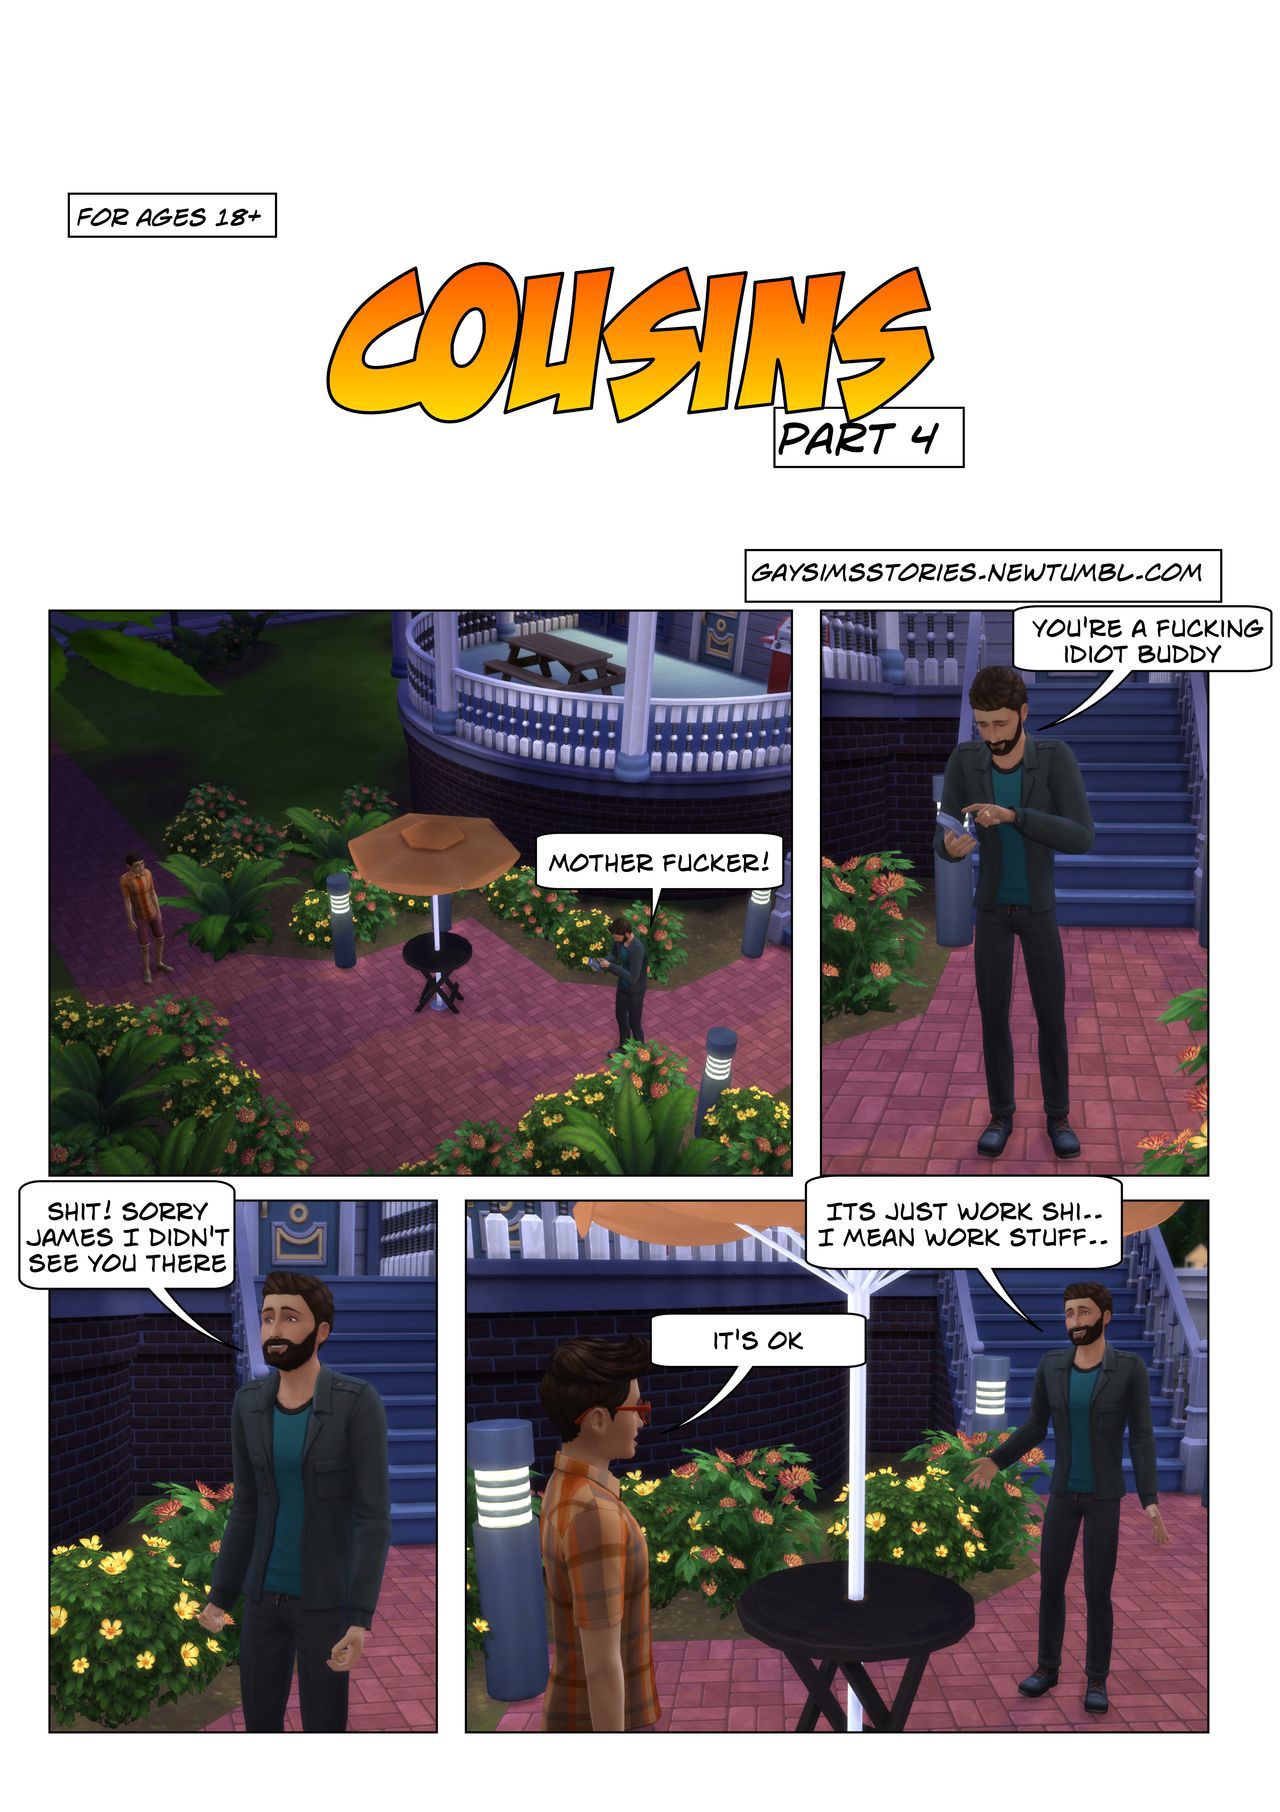 (ENG) Cousins comic part 4 (gay sims stories) 1